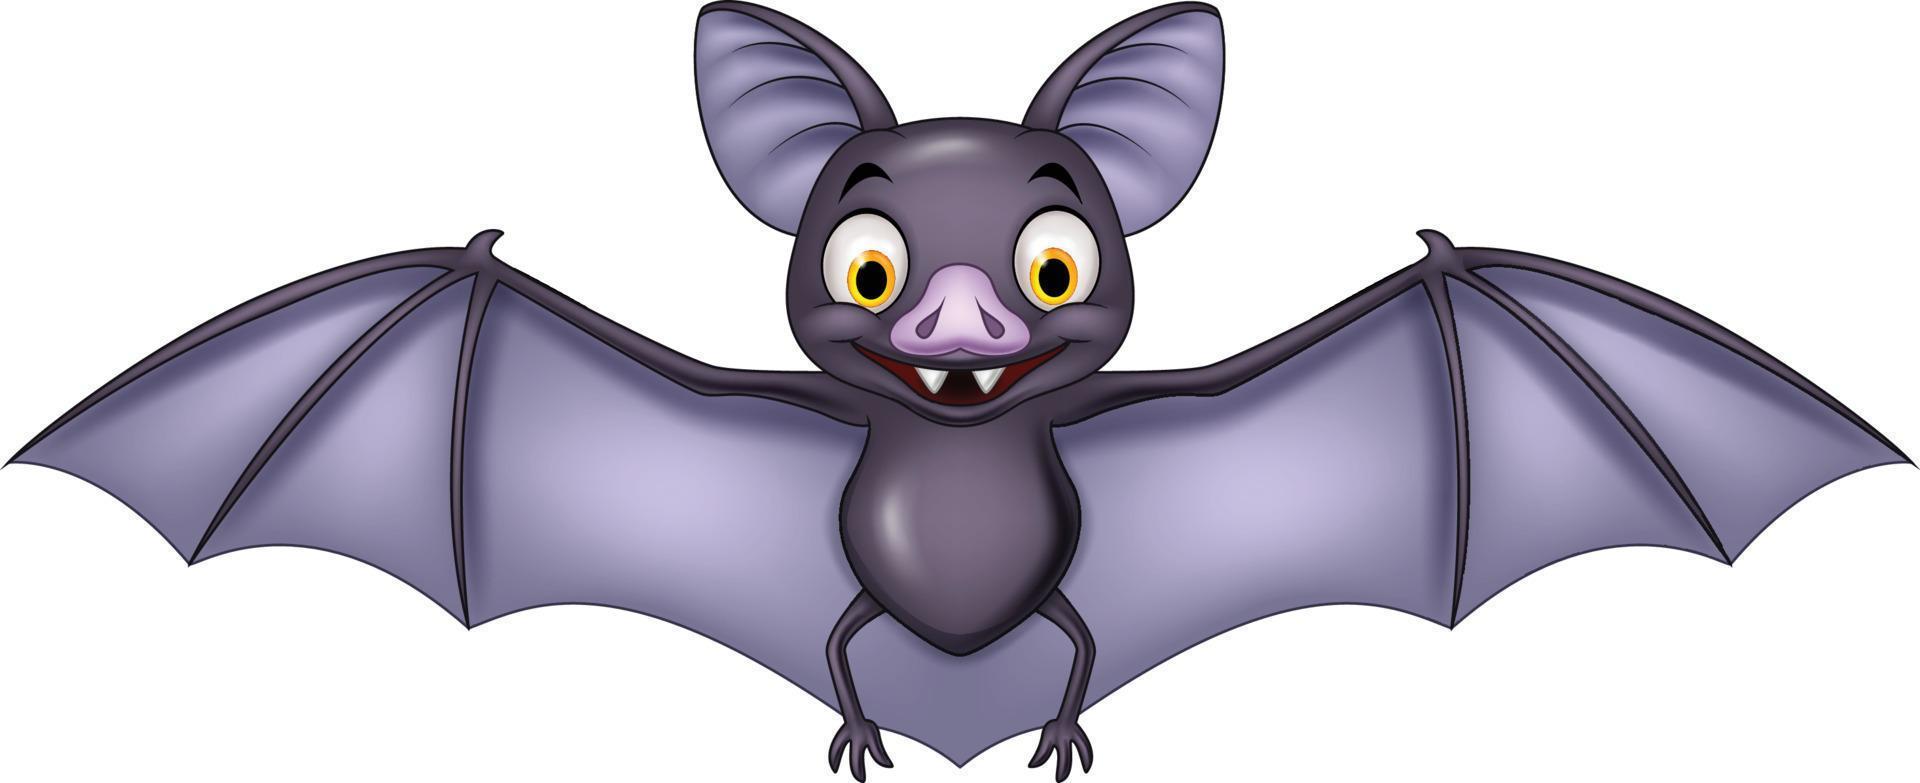 morcego dos desenhos animados isolado no fundo branco vetor